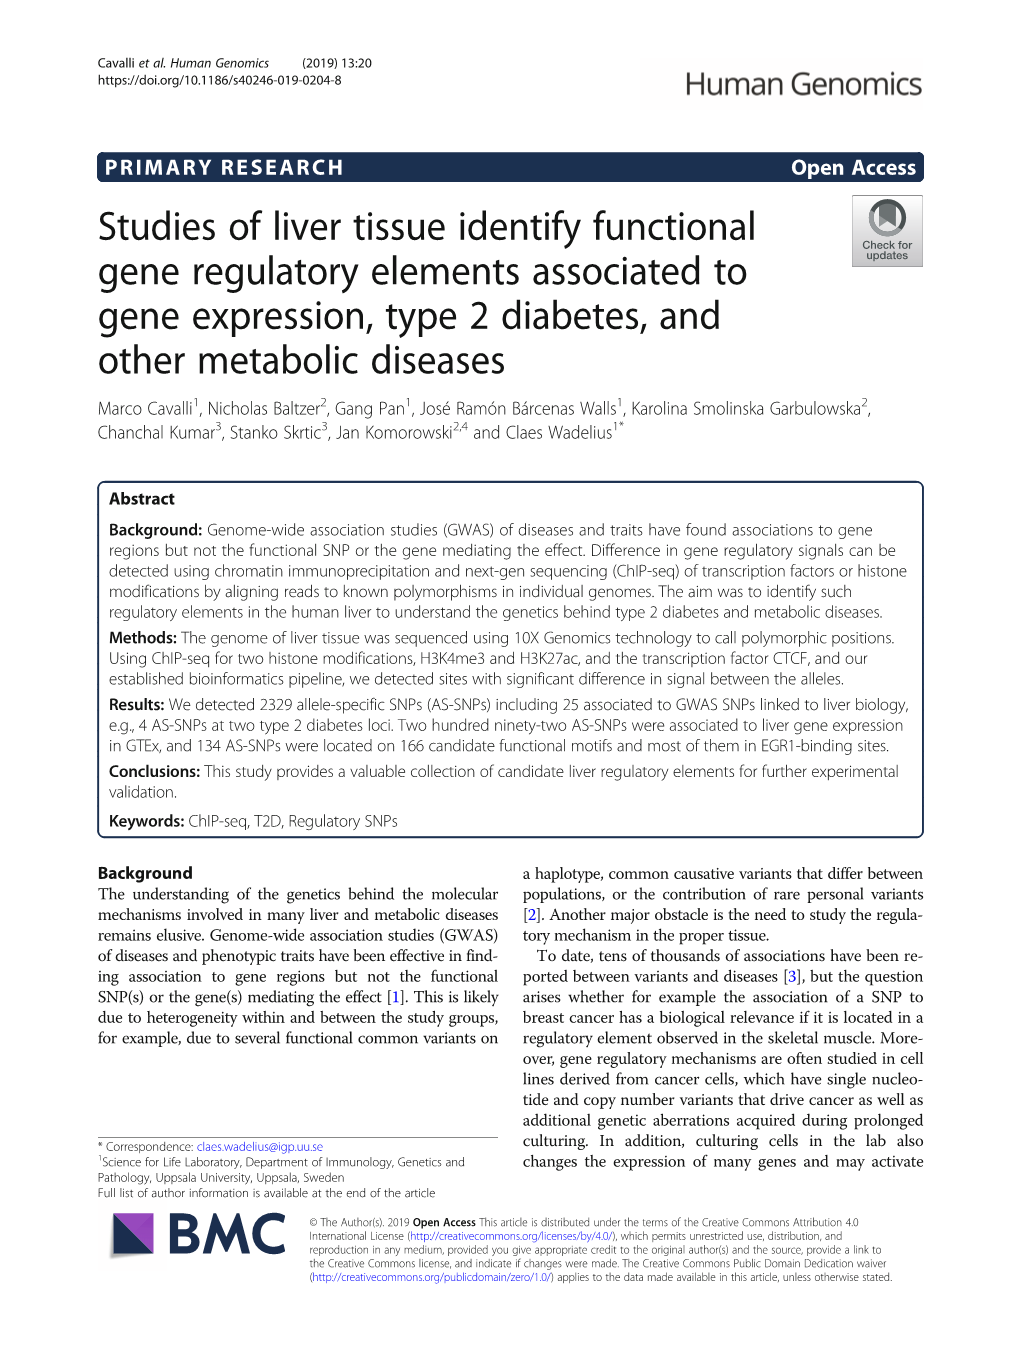 Studies of Liver Tissue Identify Functional Gene Regulatory Elements